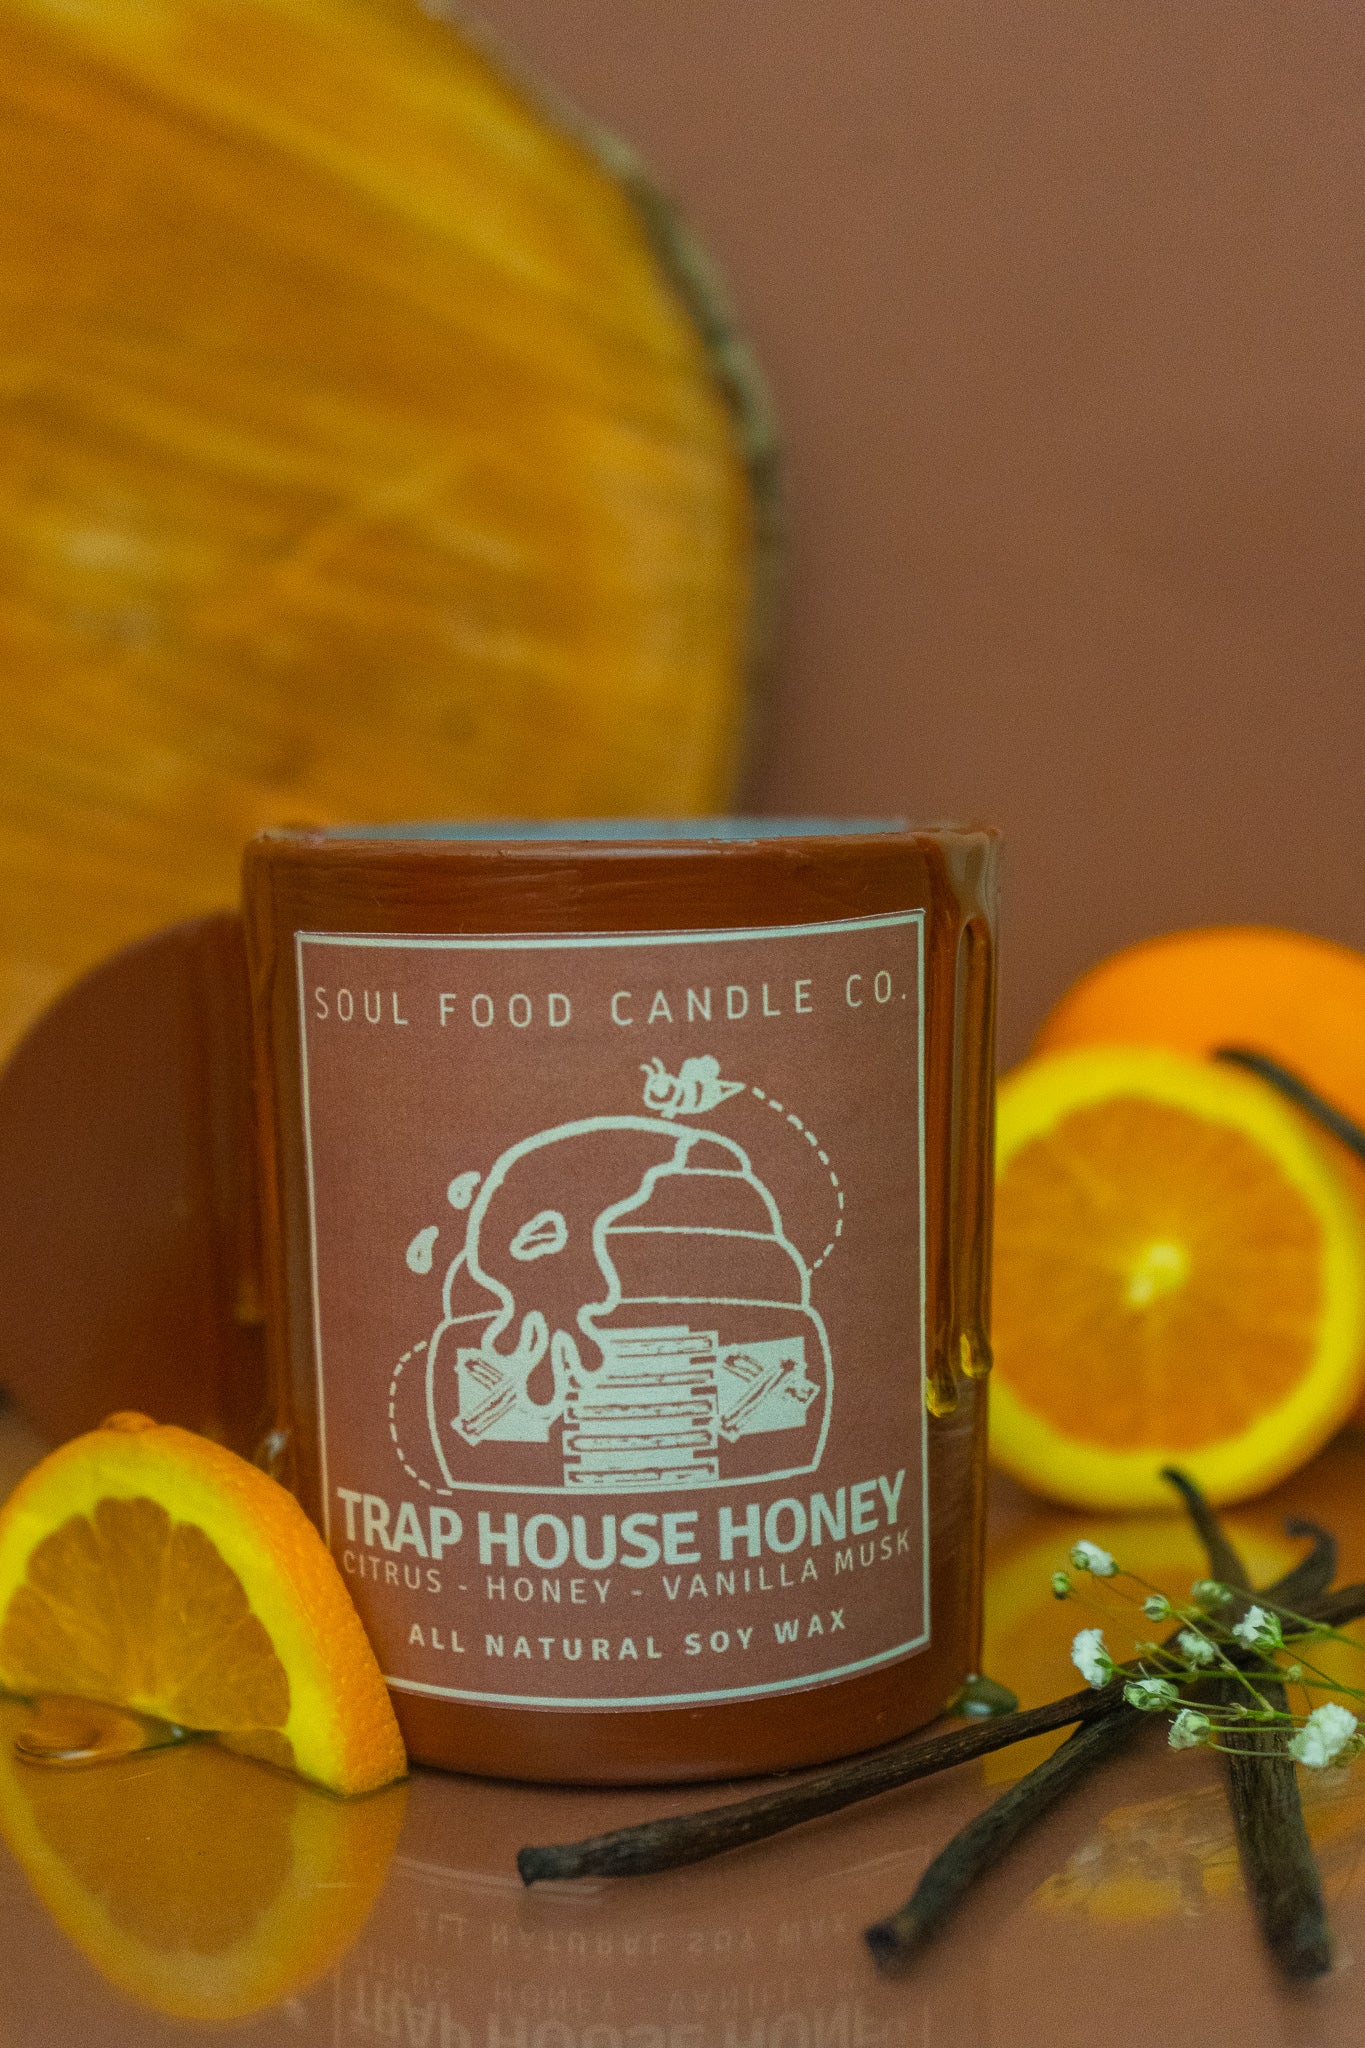 Trap House Honey - Soul Food Candle Company